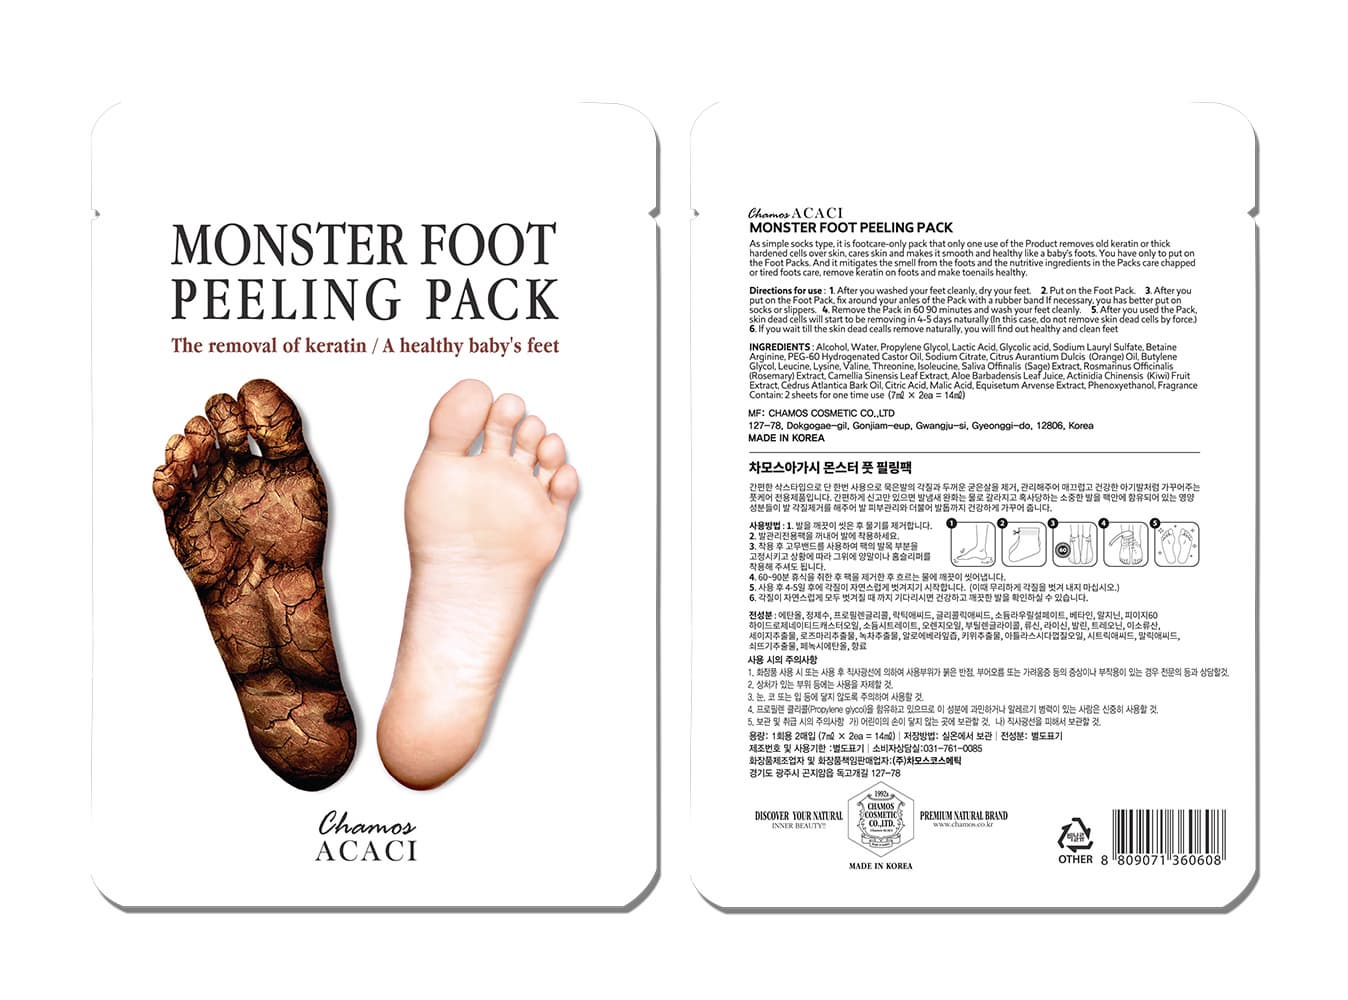 chamos acaci Monster Foot Peeling Pack